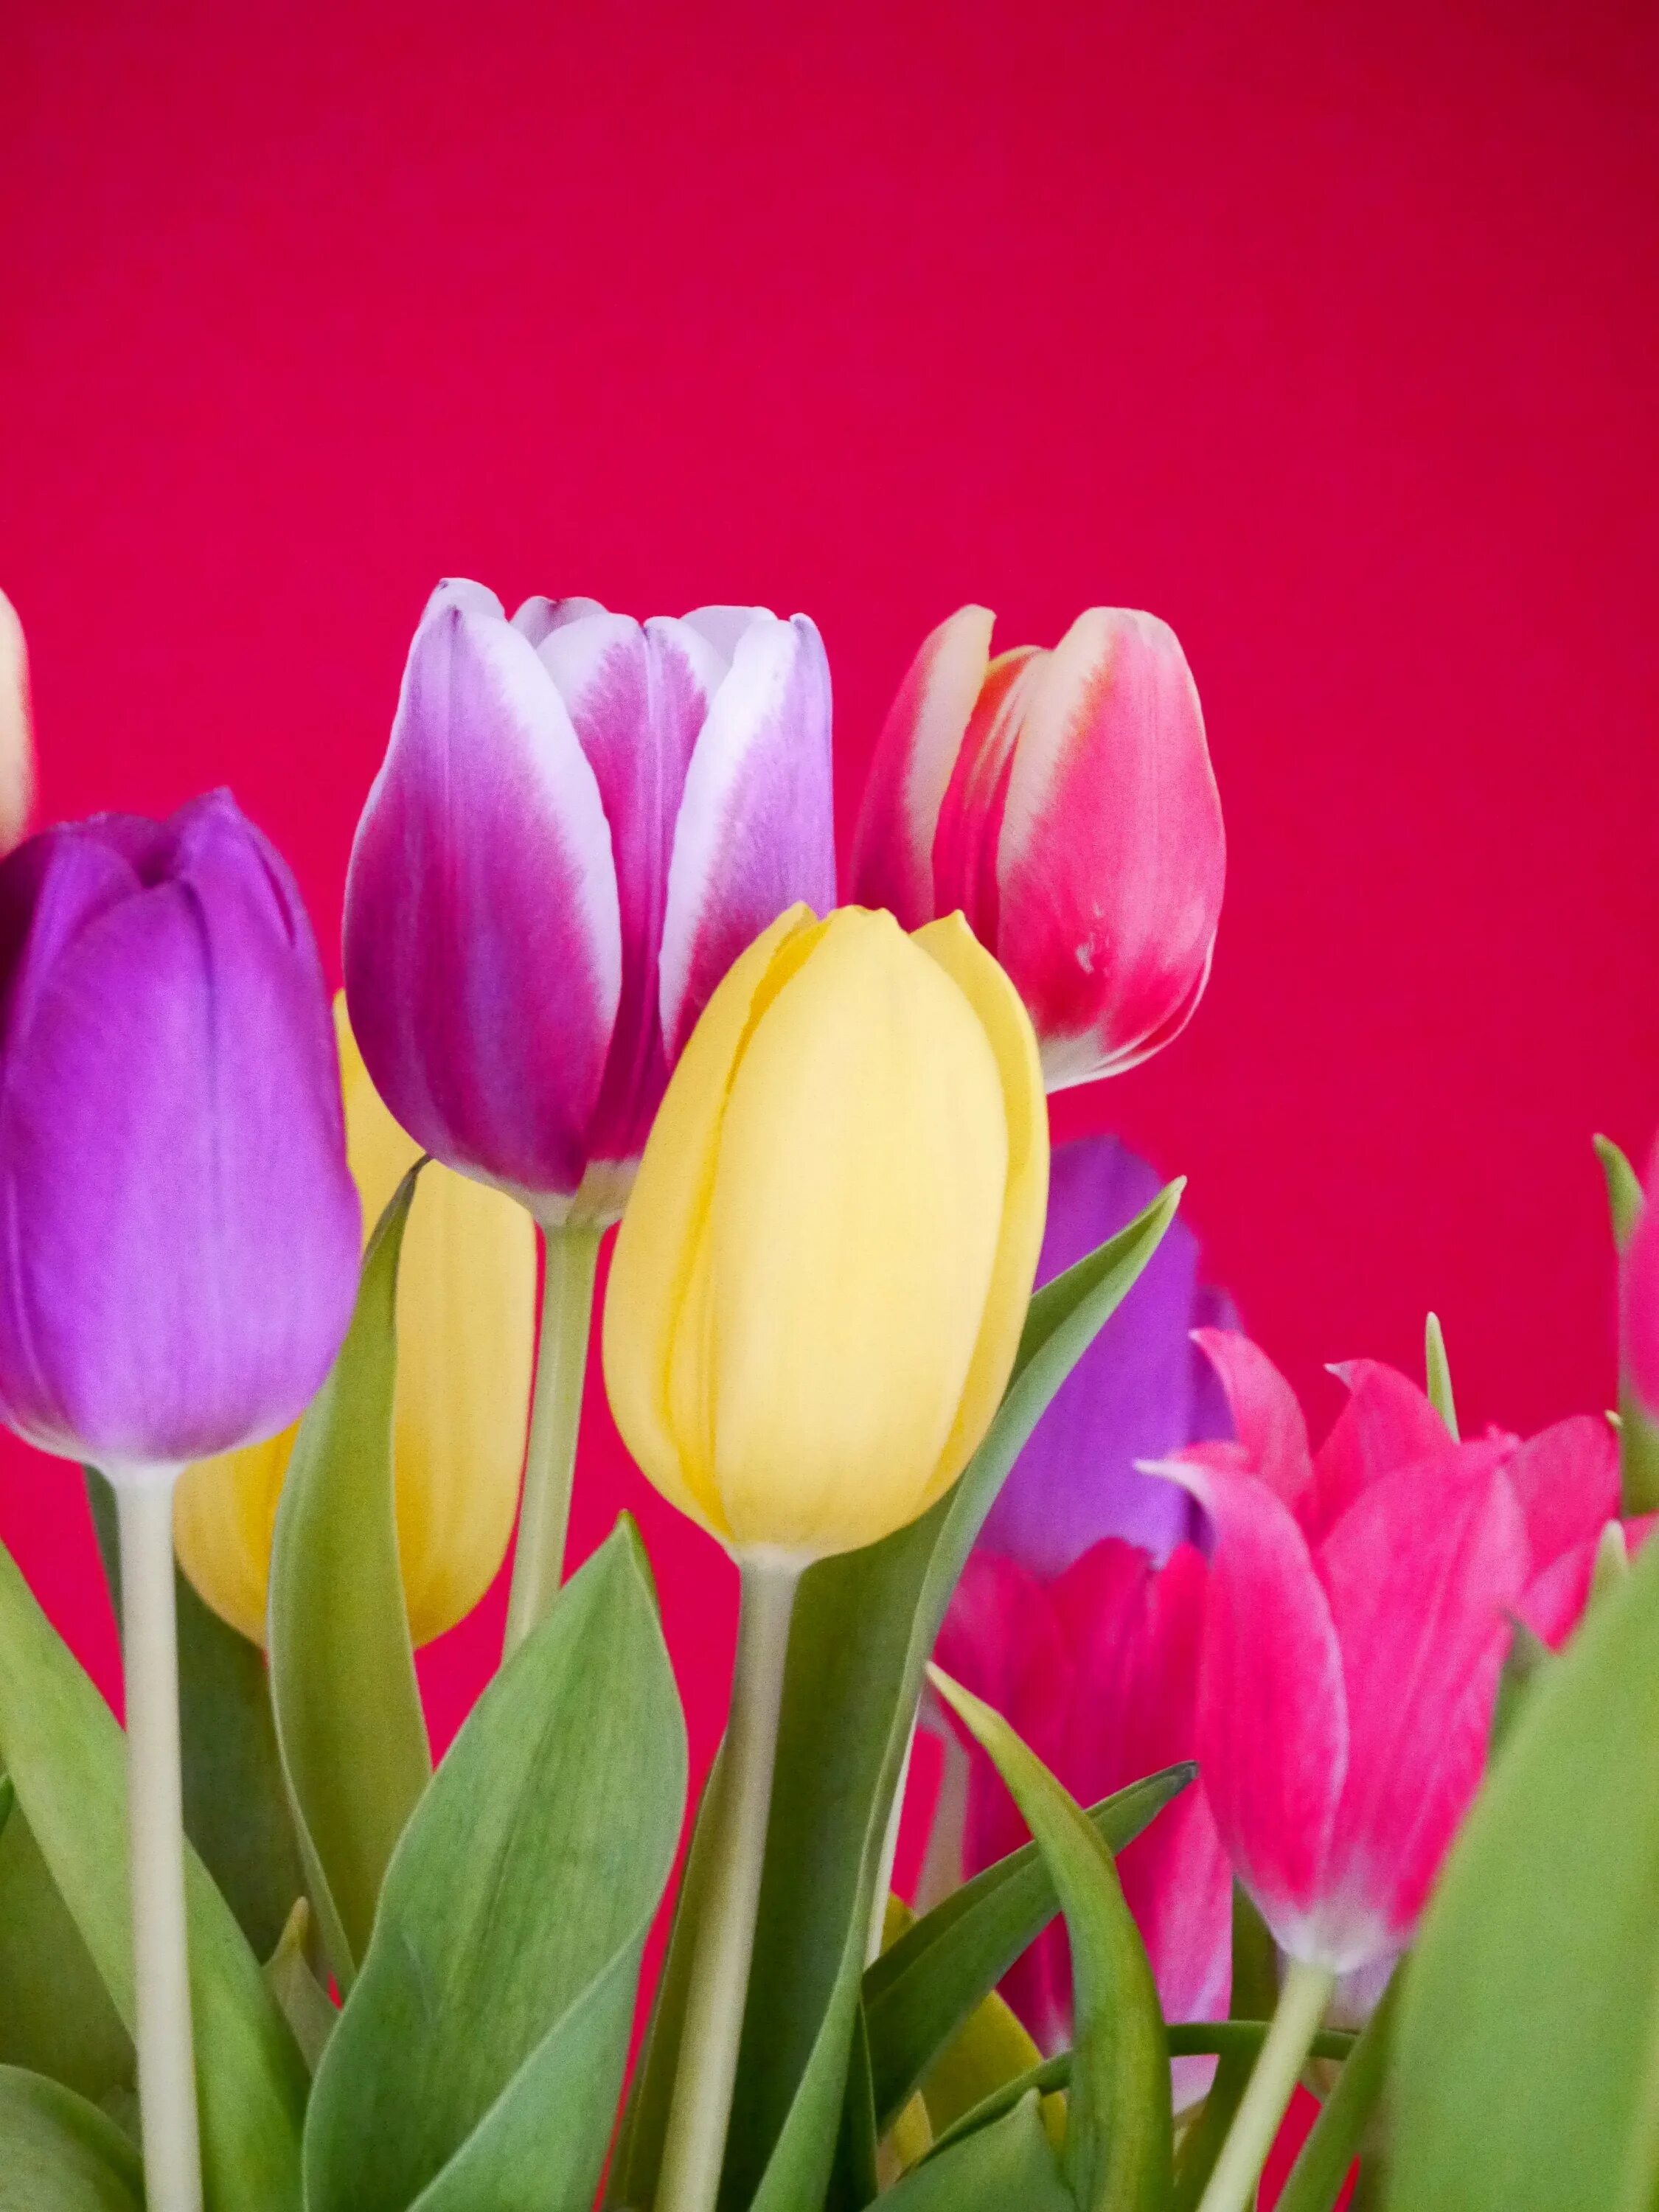 Цветы тюльпаны. Красивые тюльпаны. Яркие тюльпаны. Красивые разноцветные тюльпаны.